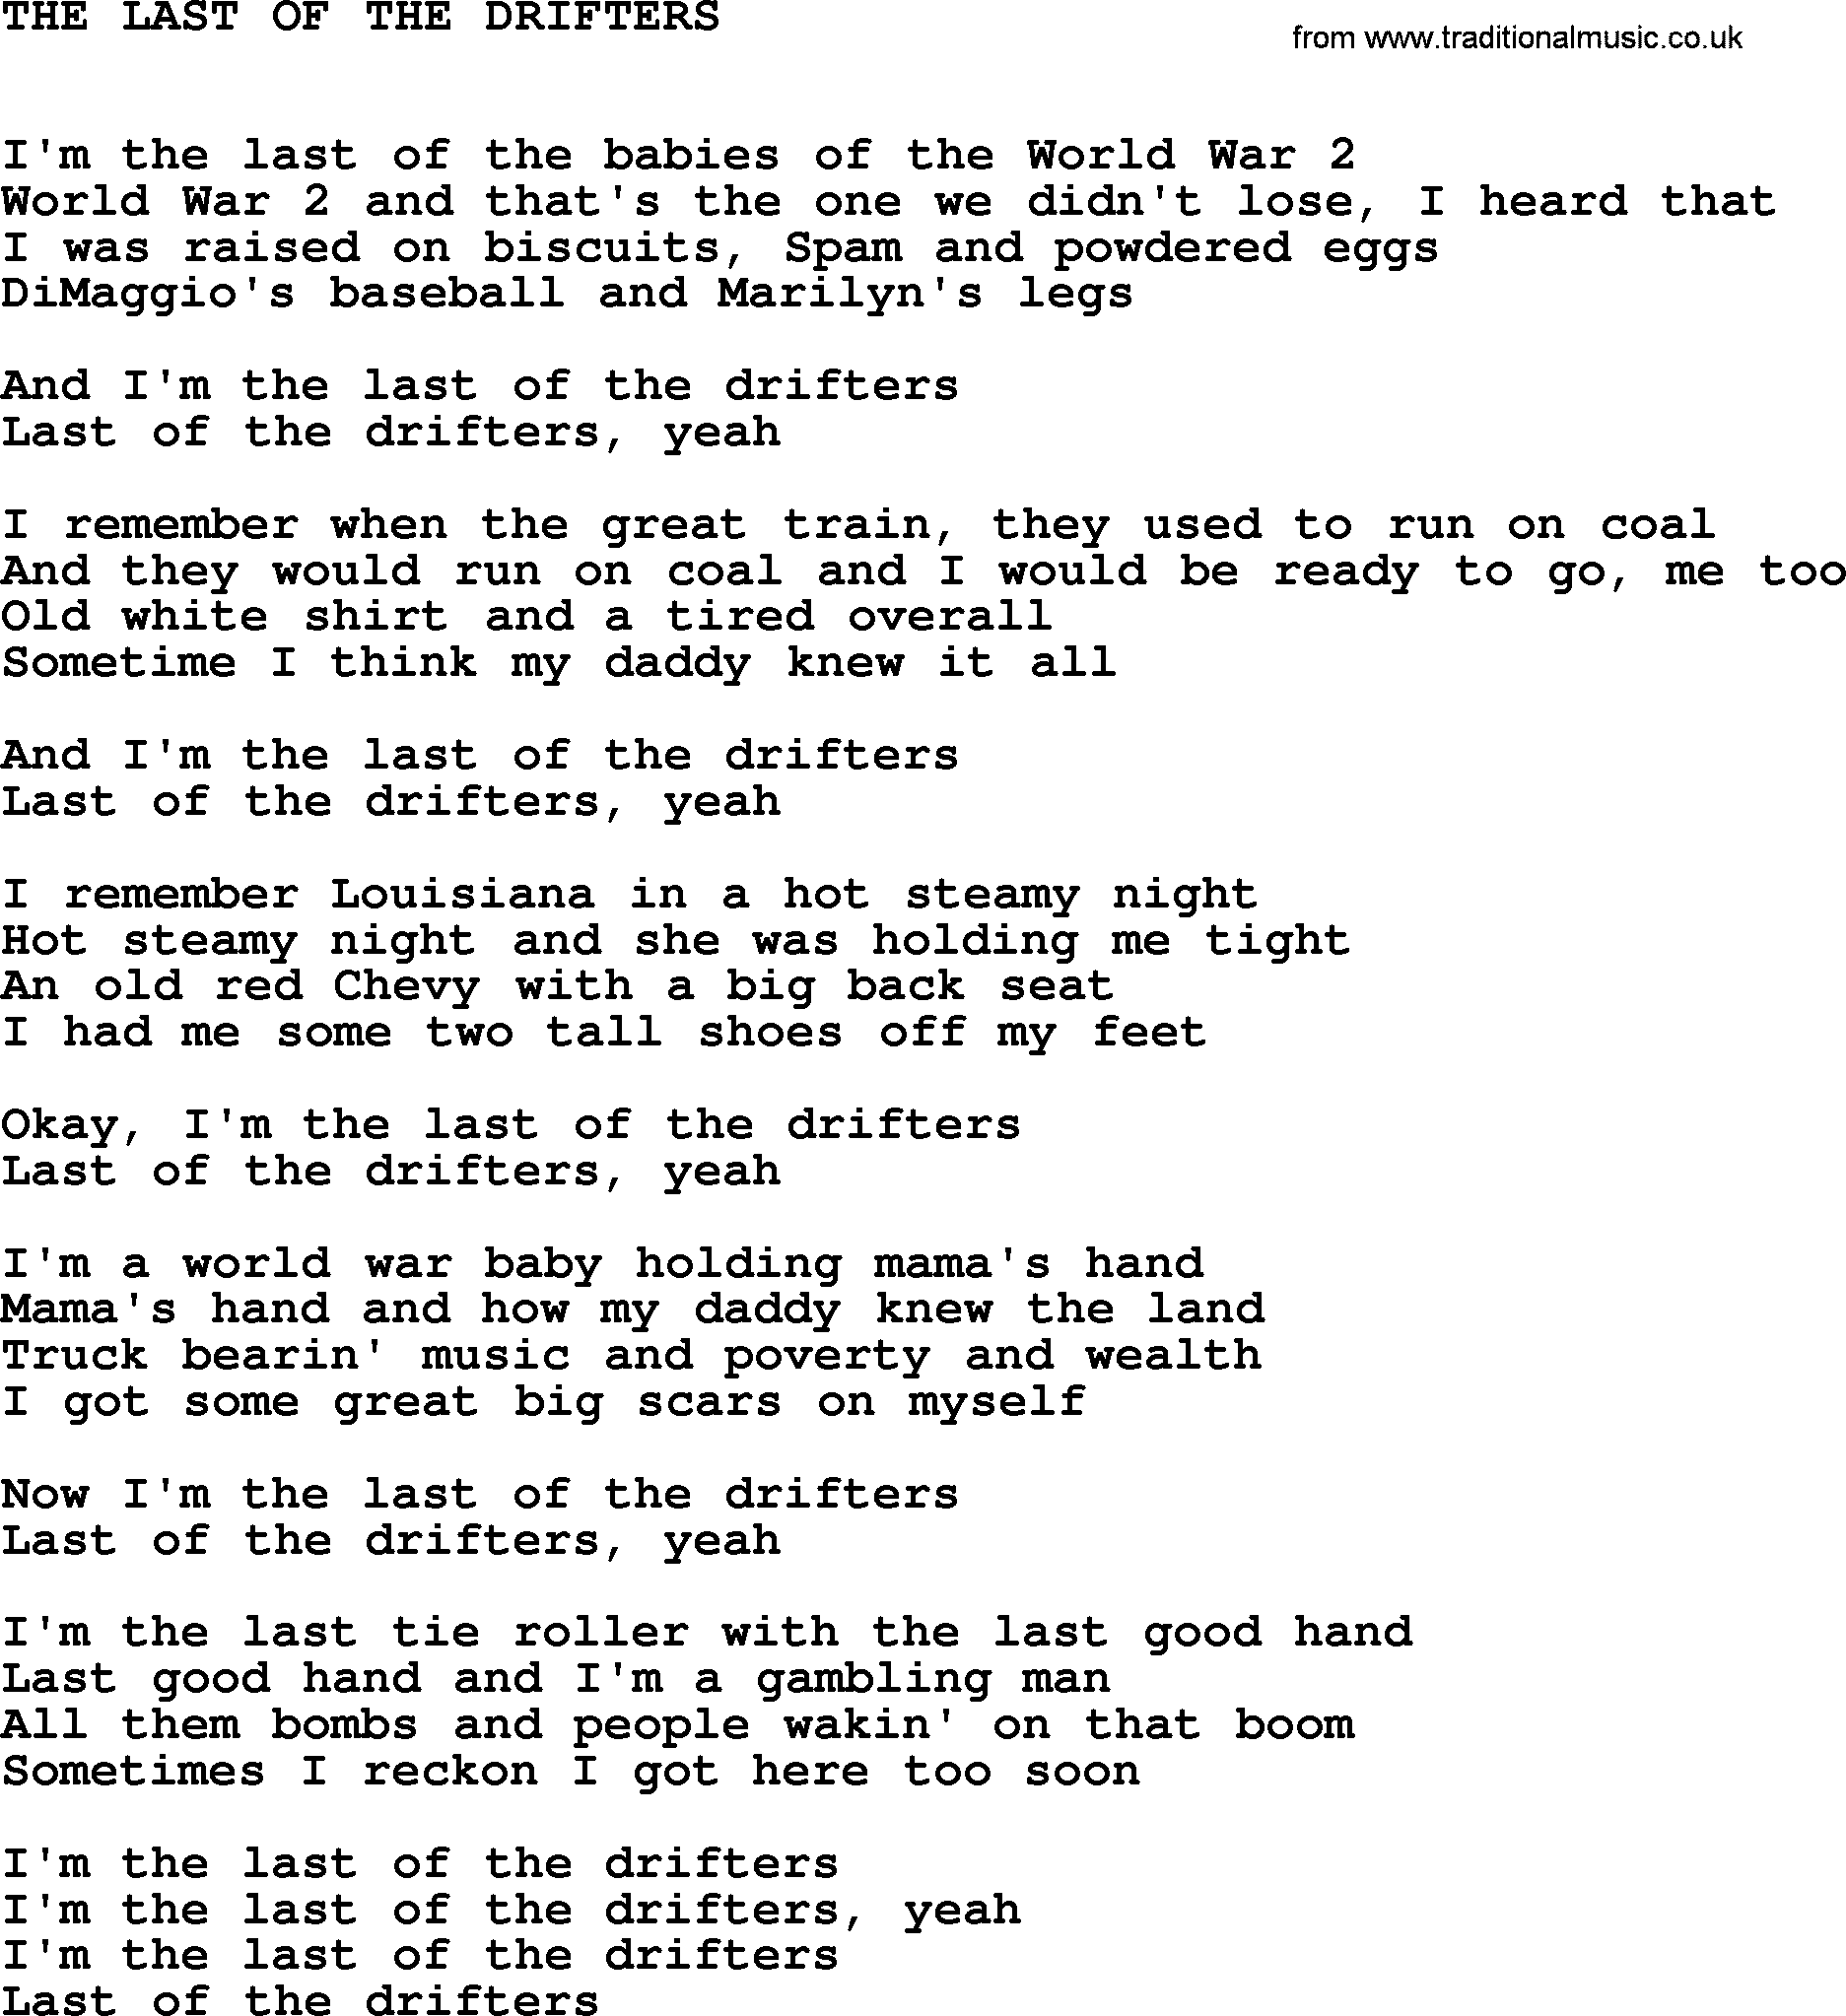 Johnny Cash song The Last Of The Drifters.txt lyrics